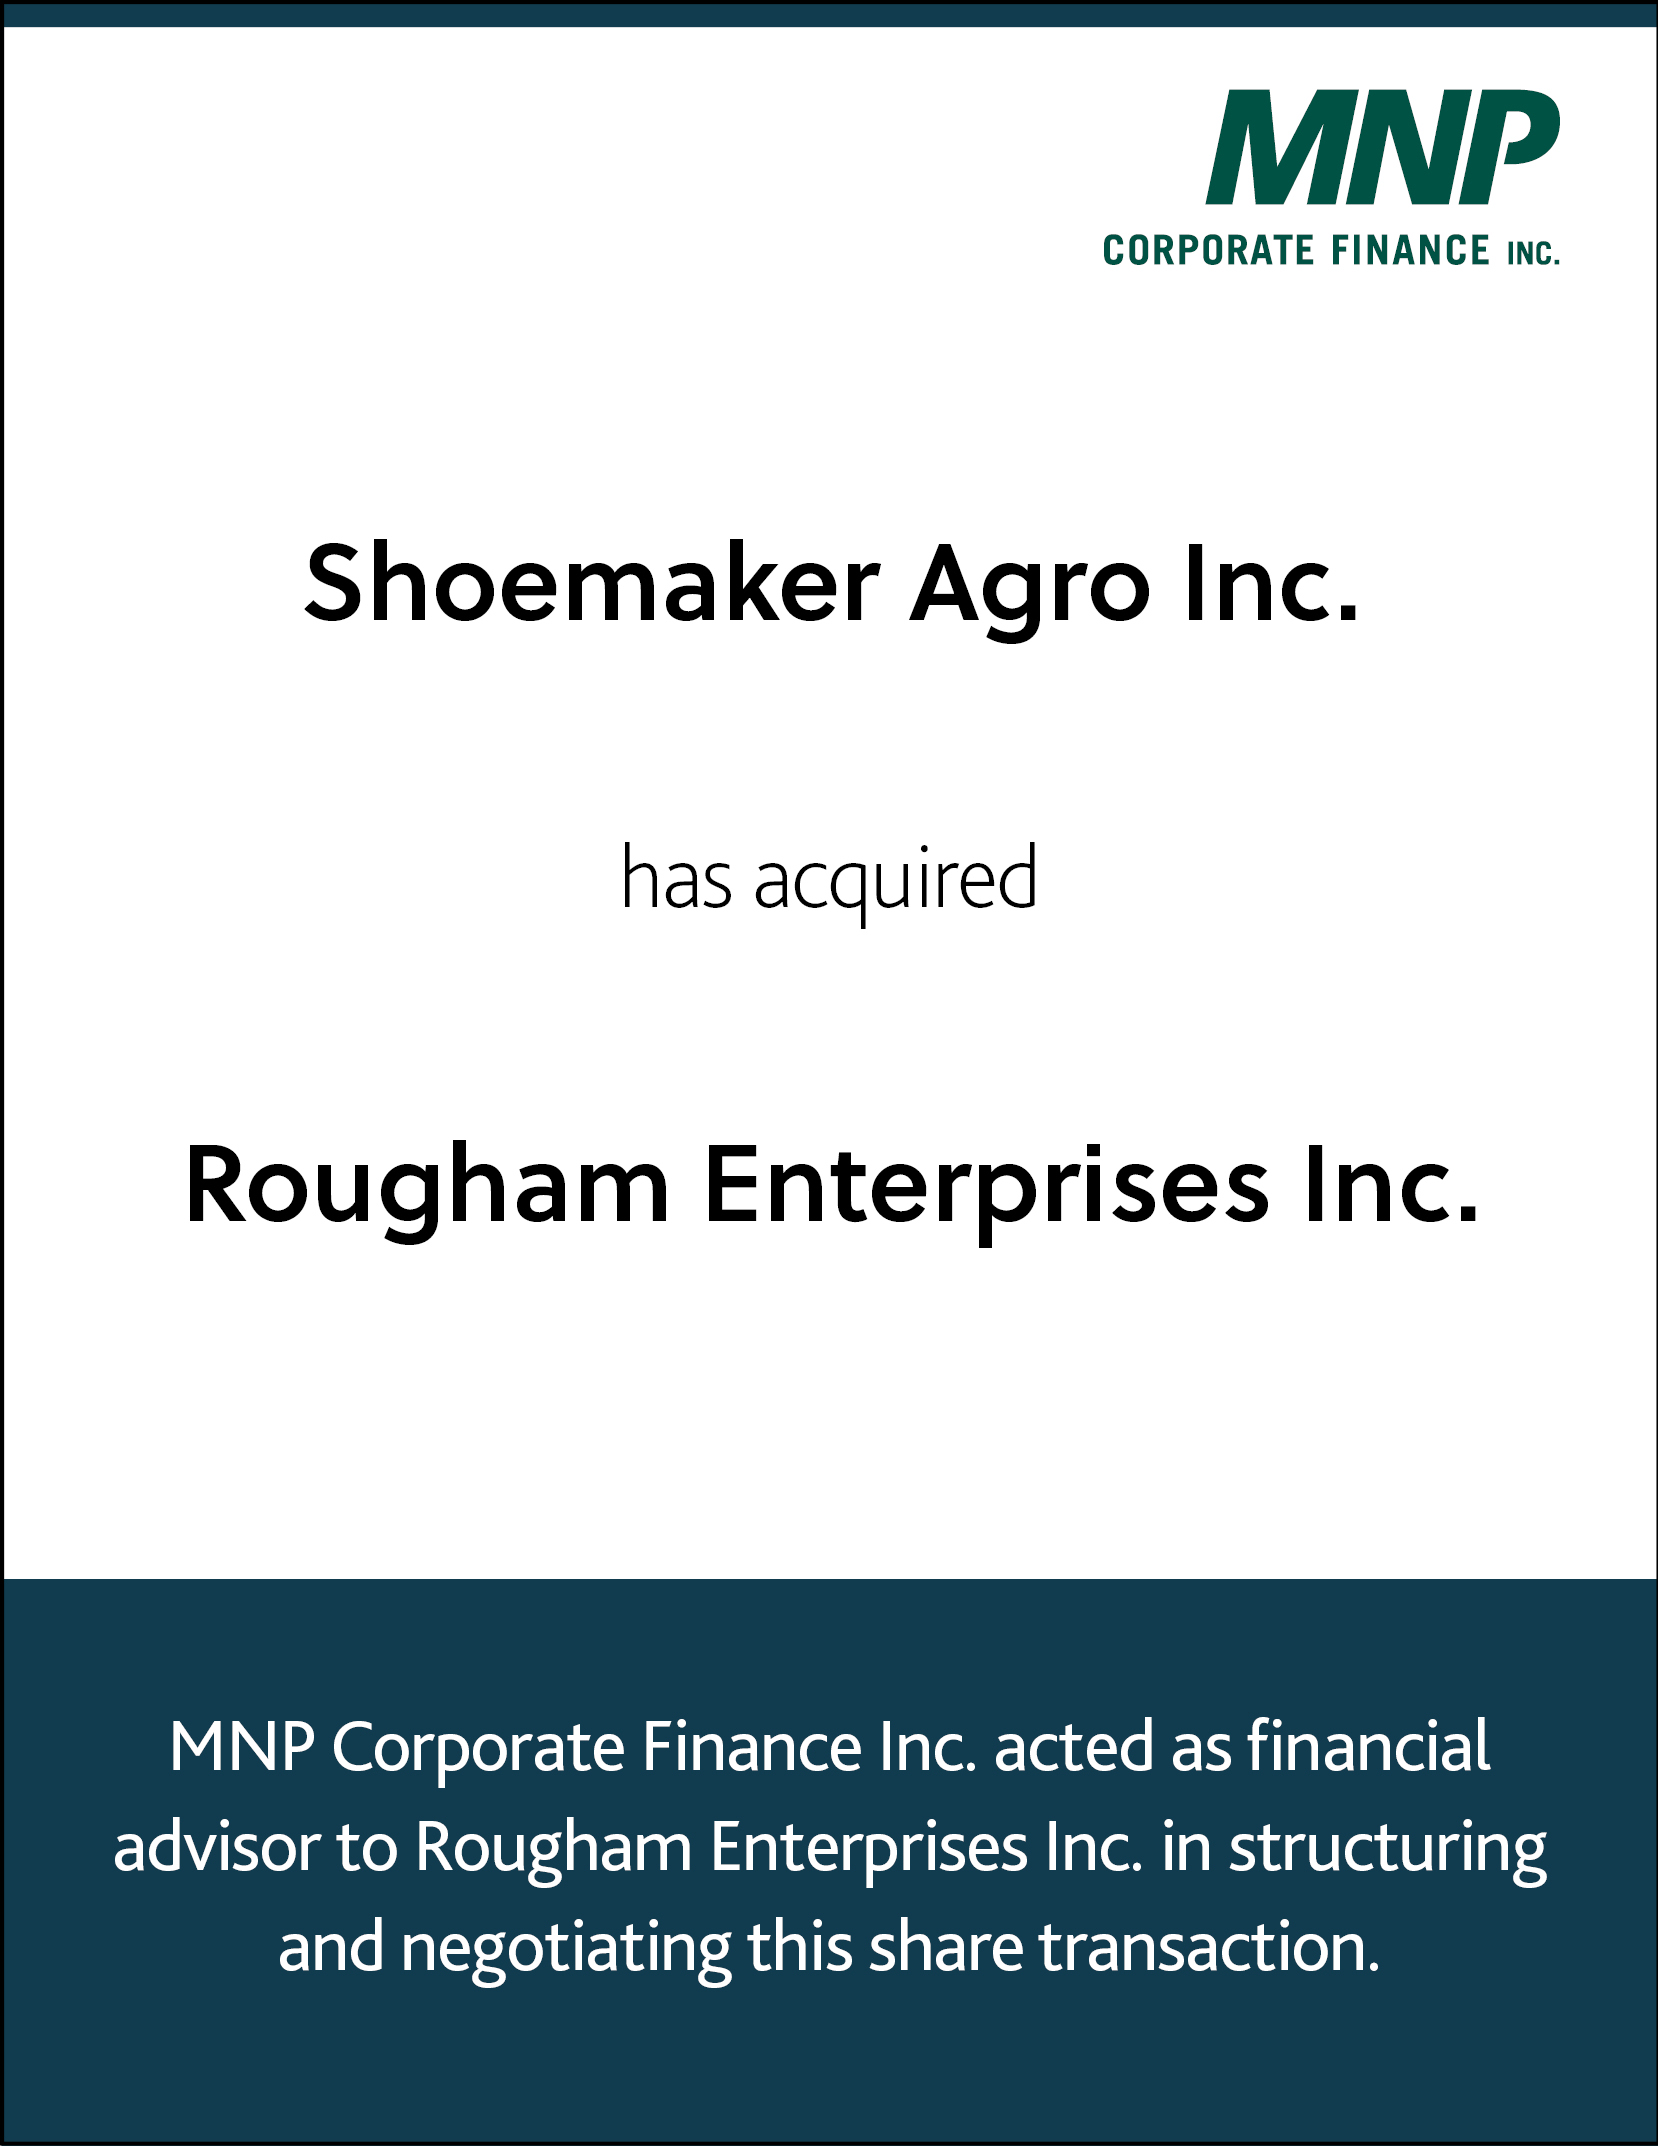 Shoemaker Agro Inc. has acquired Rougham Enterprises Inc. 